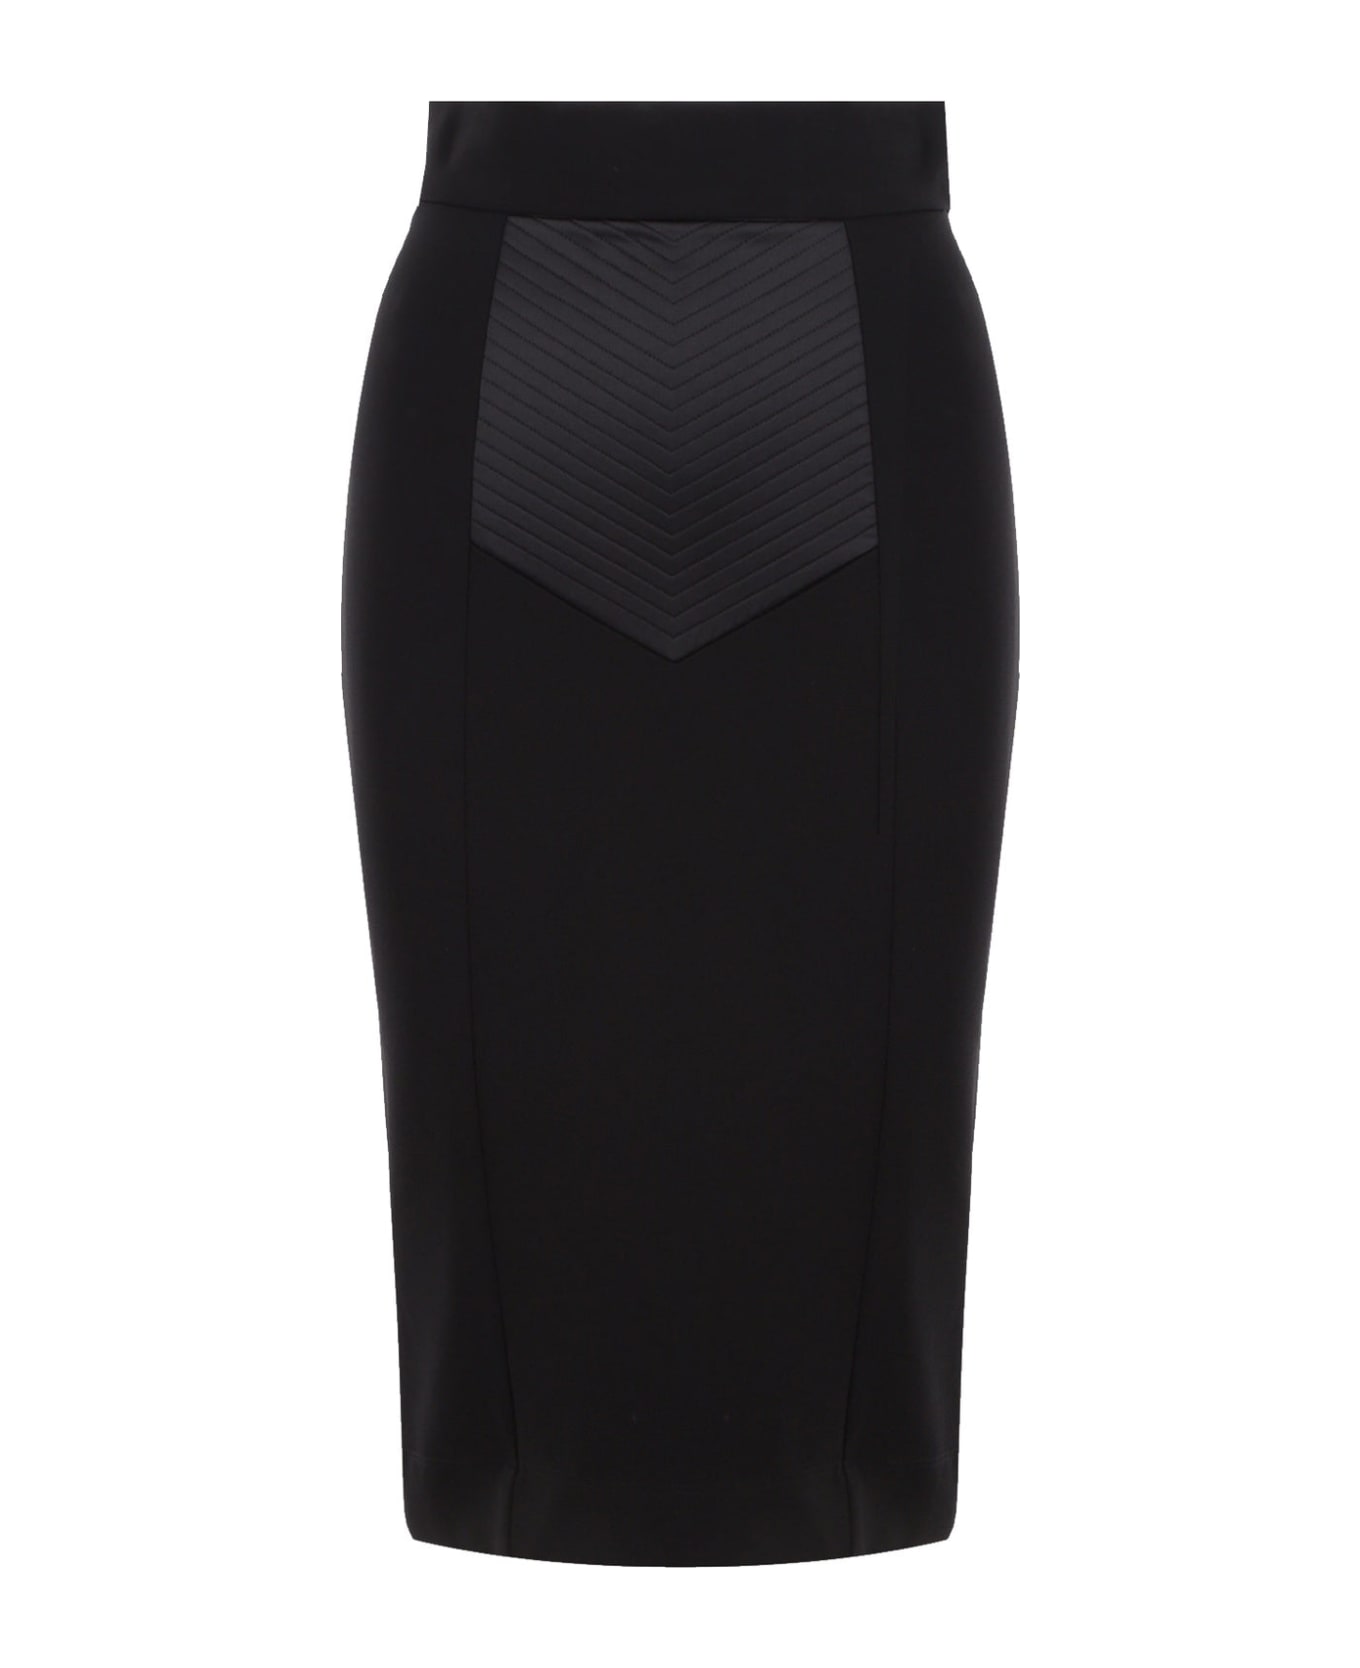 Dolce & Gabbana Pencil Skirt - Black